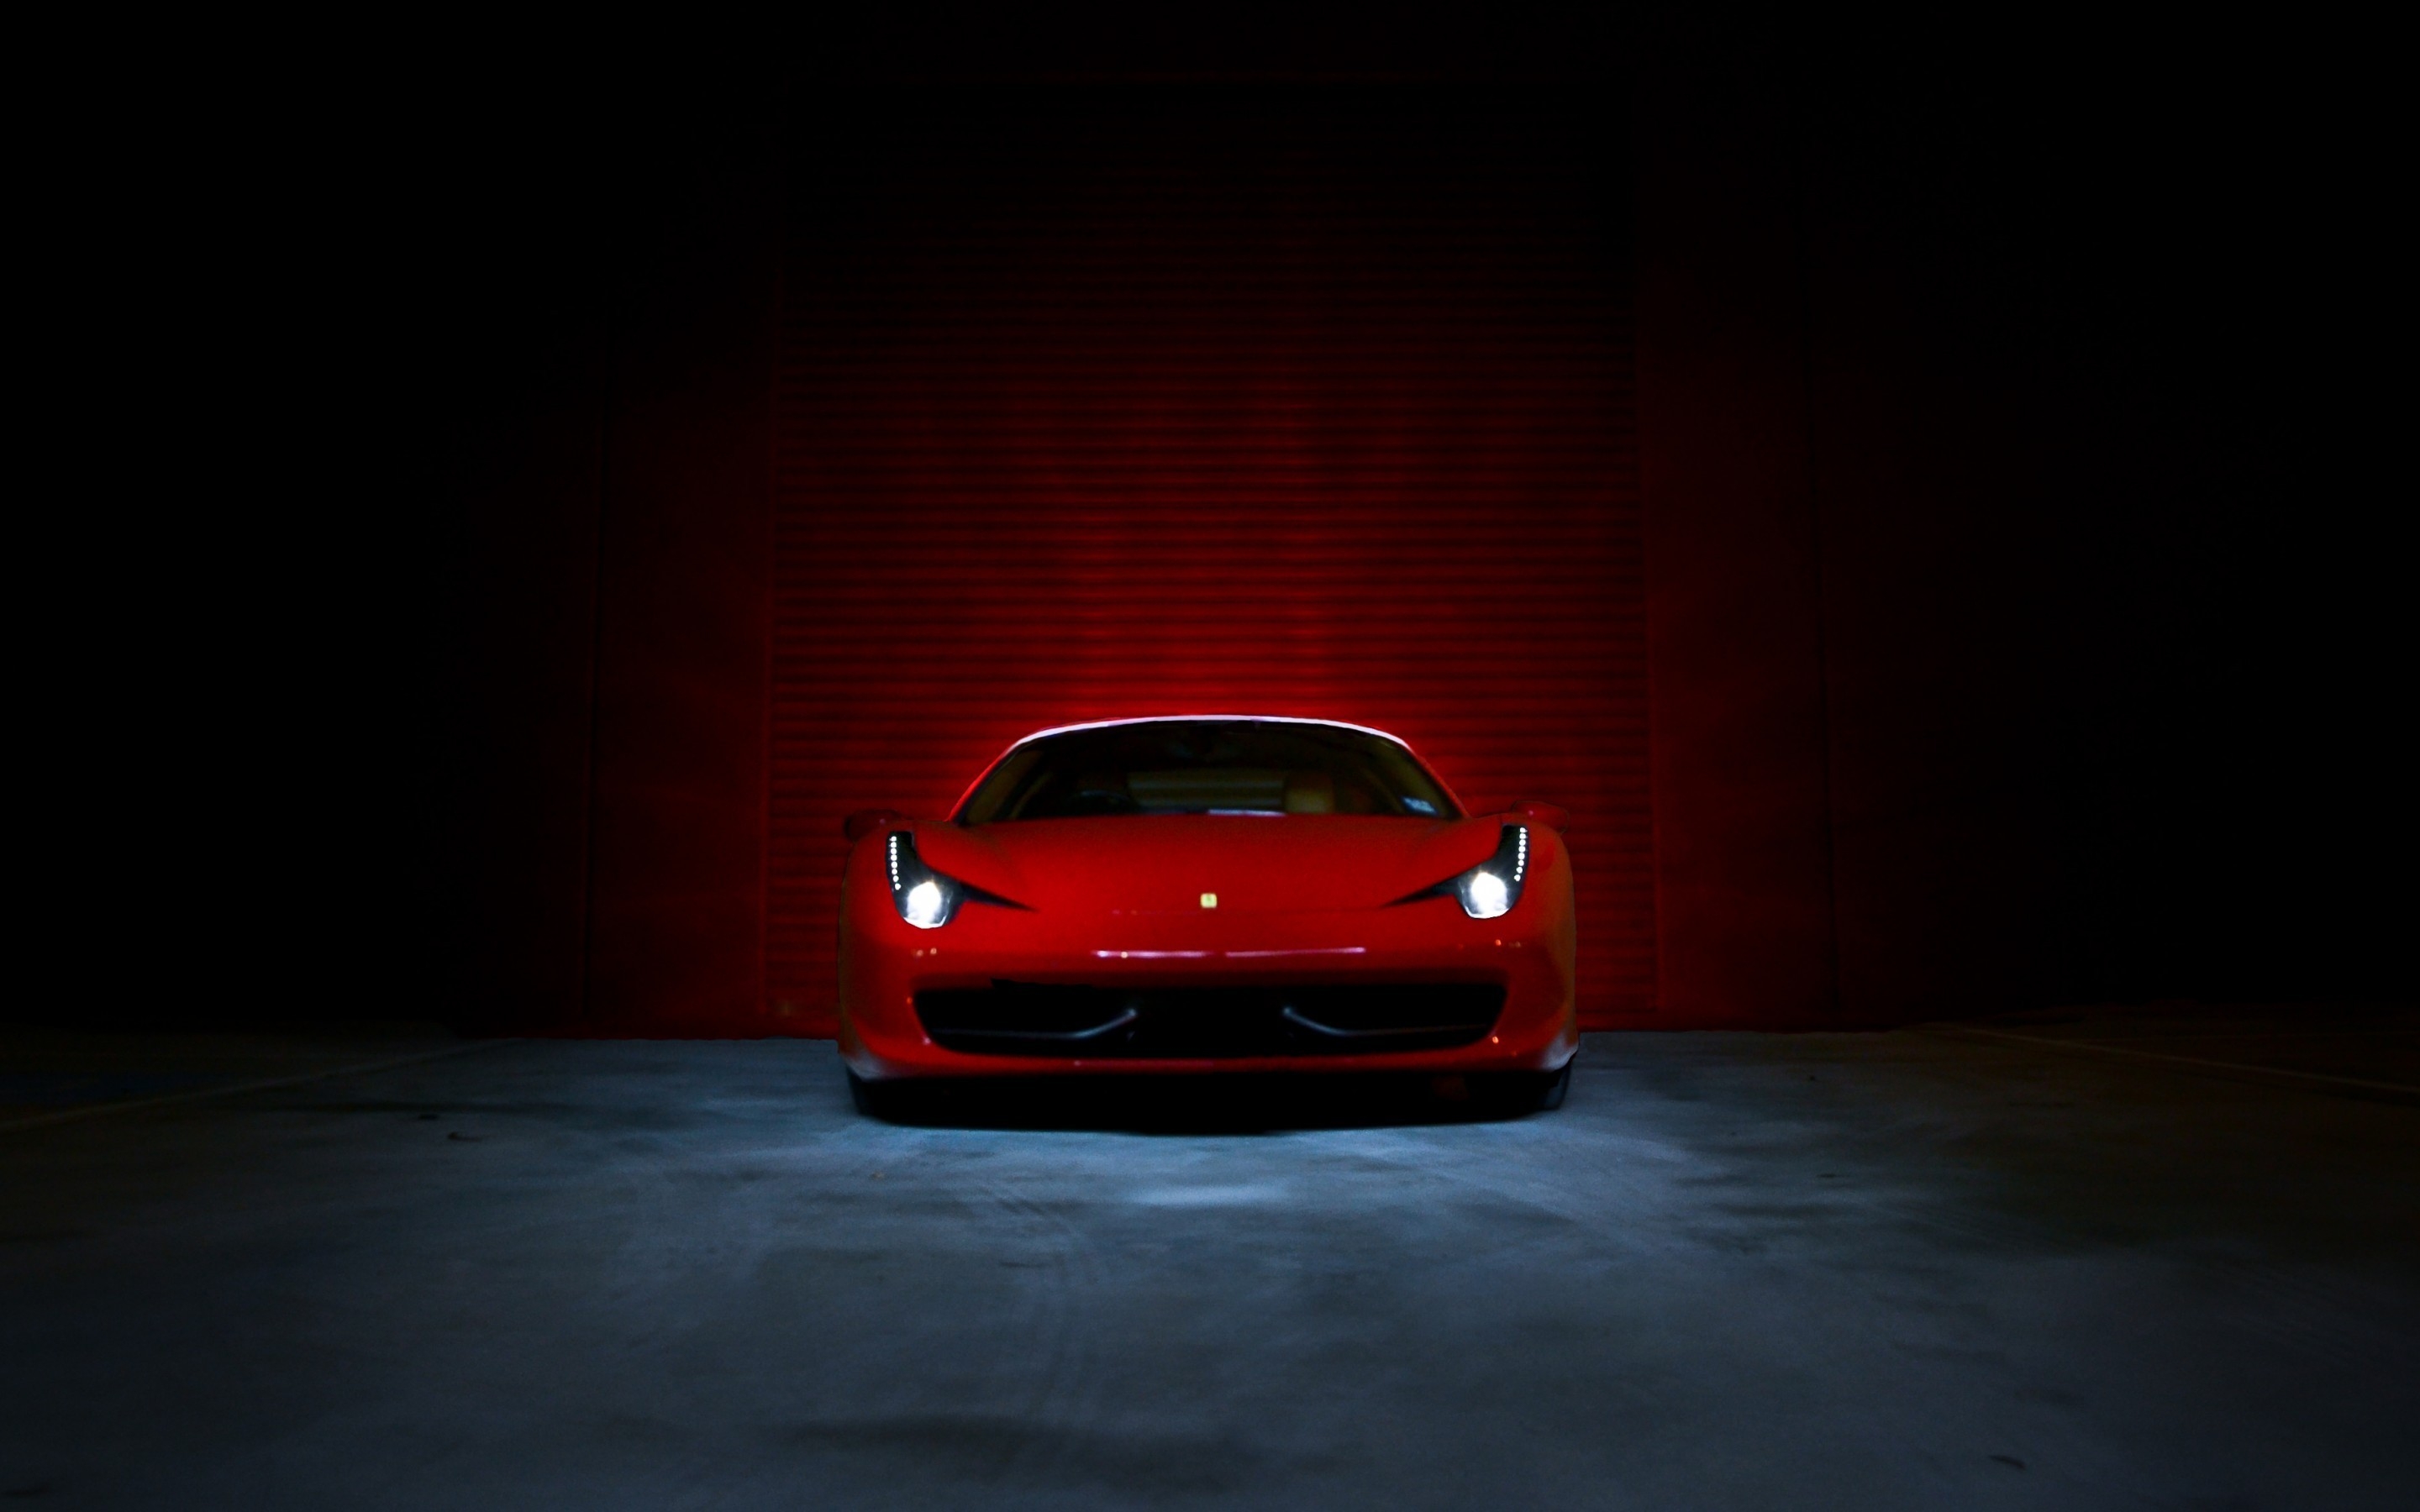 Ferrari 458 Italia Red  for 2880 x 1800 Retina Display resolution